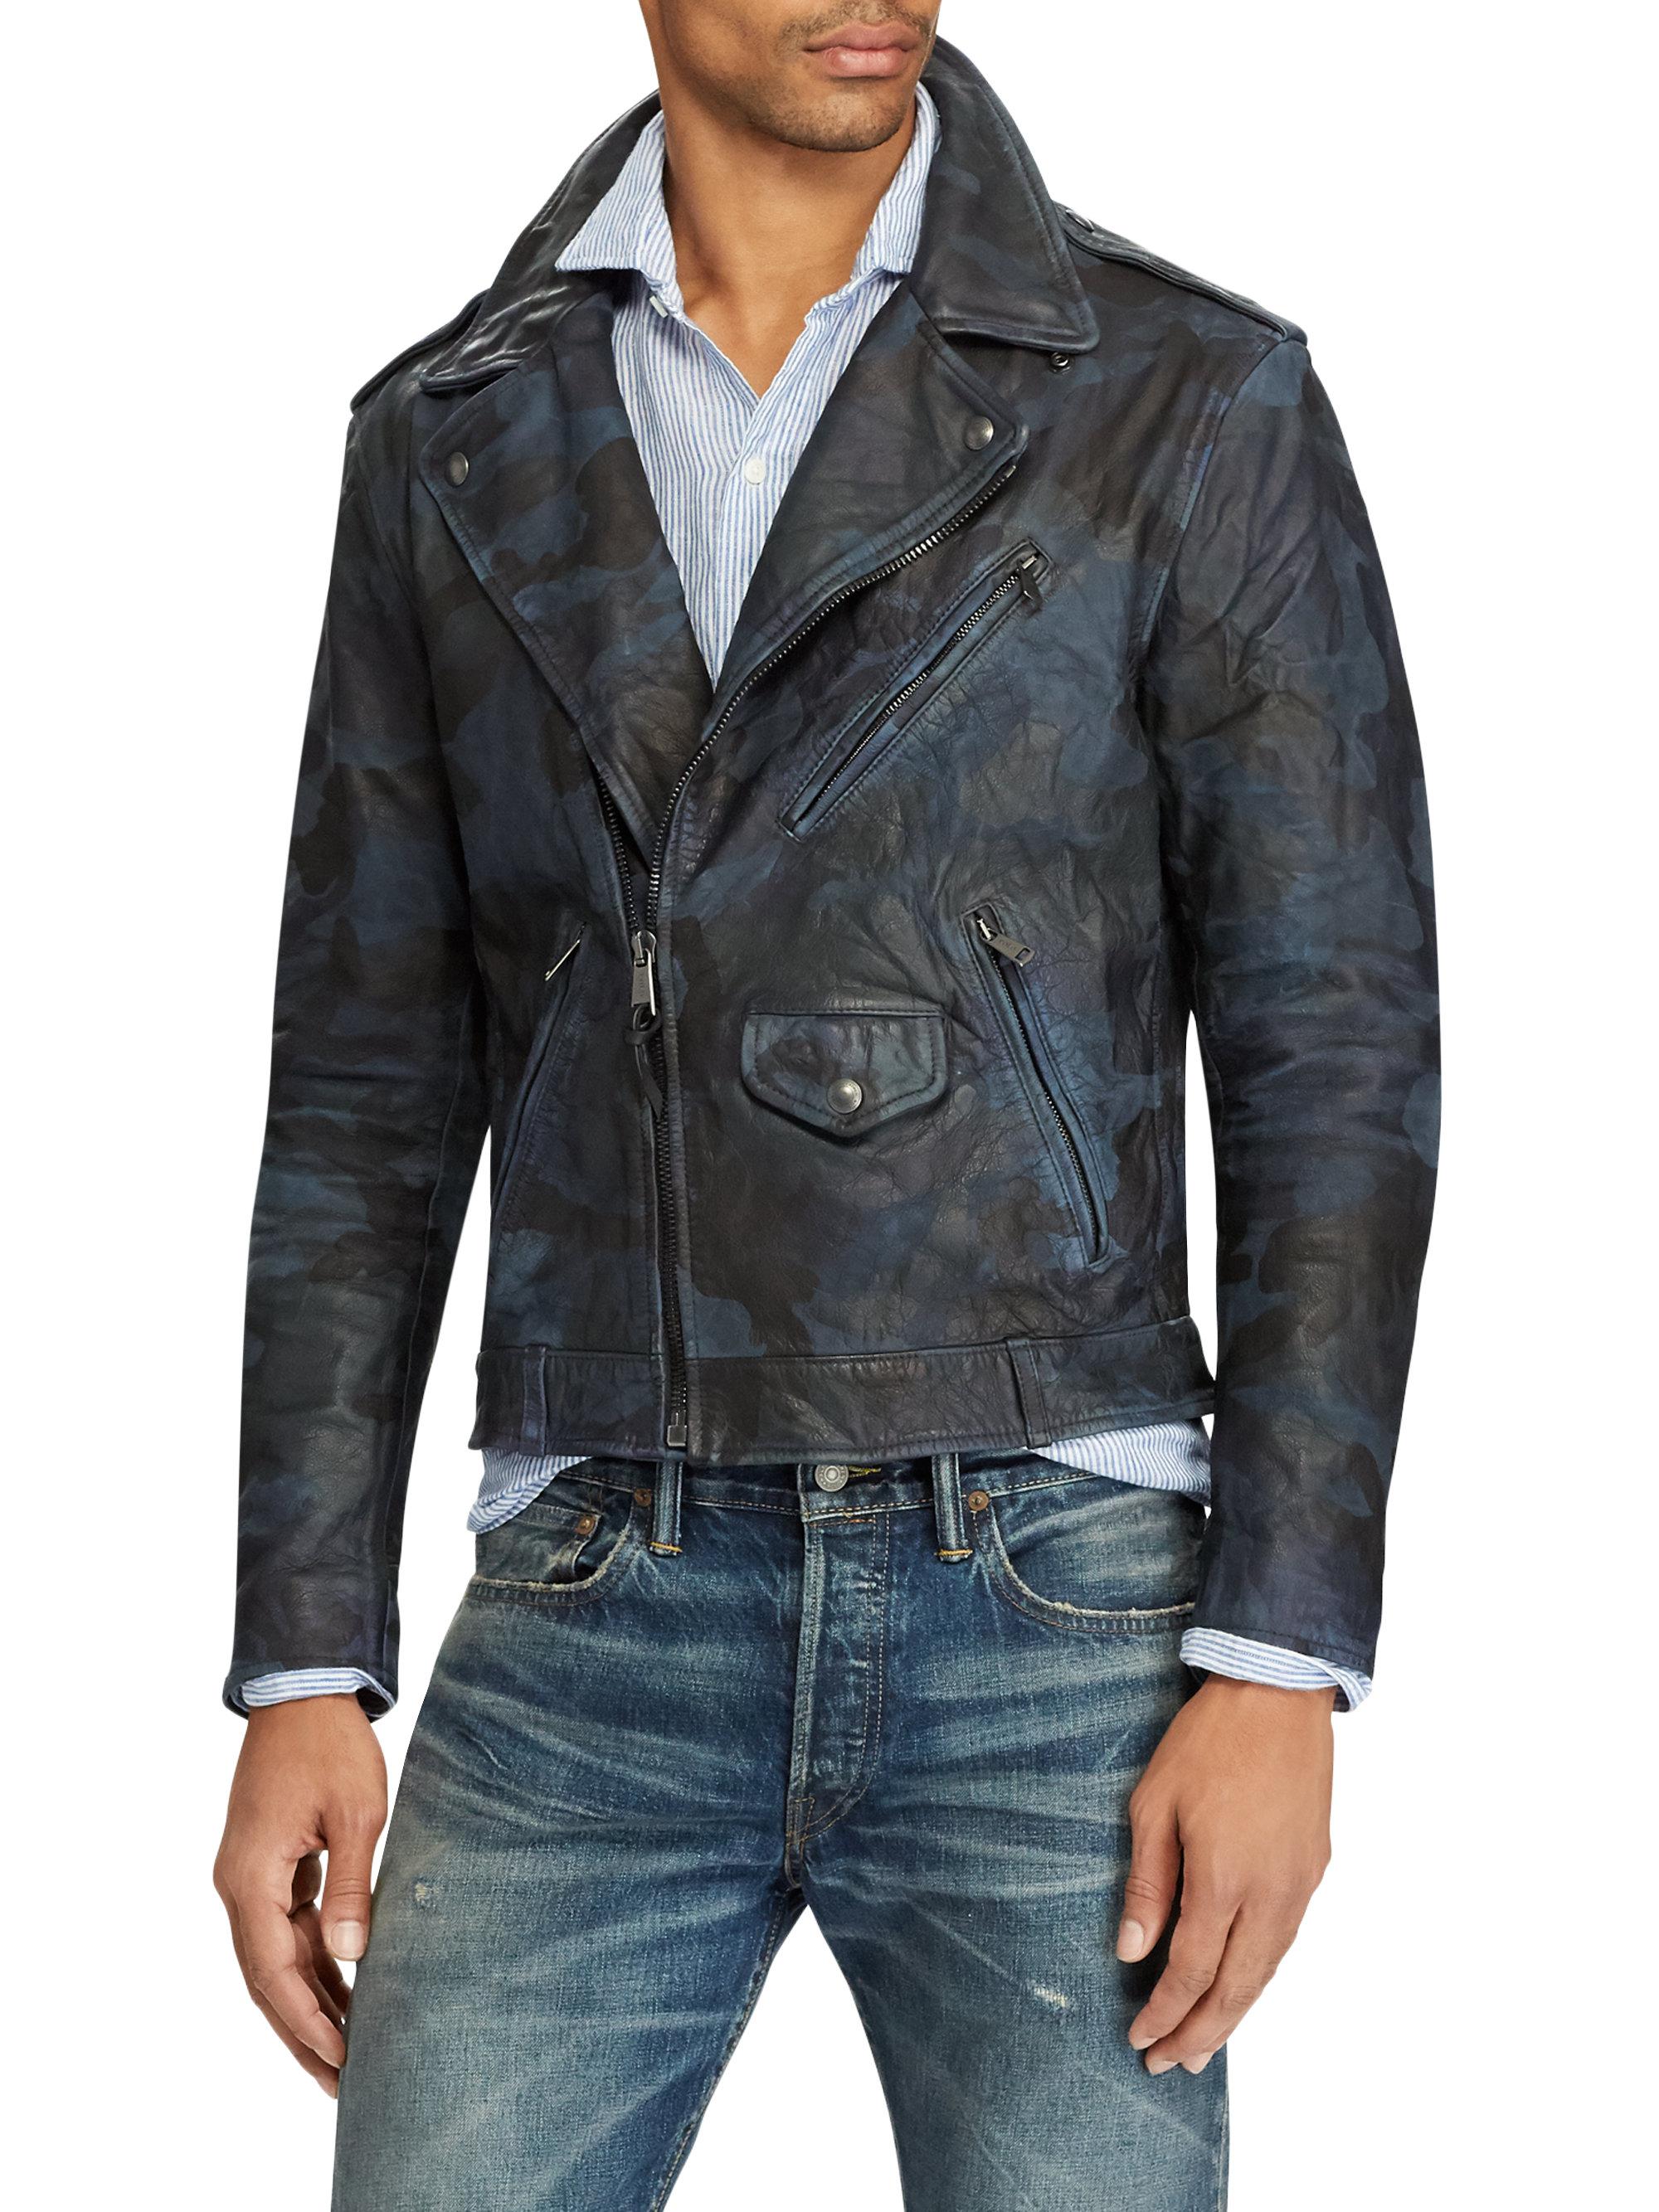 Polo Ralph Lauren Camo Leather Biker Jacket in Indigo (Blue) for Men - Lyst